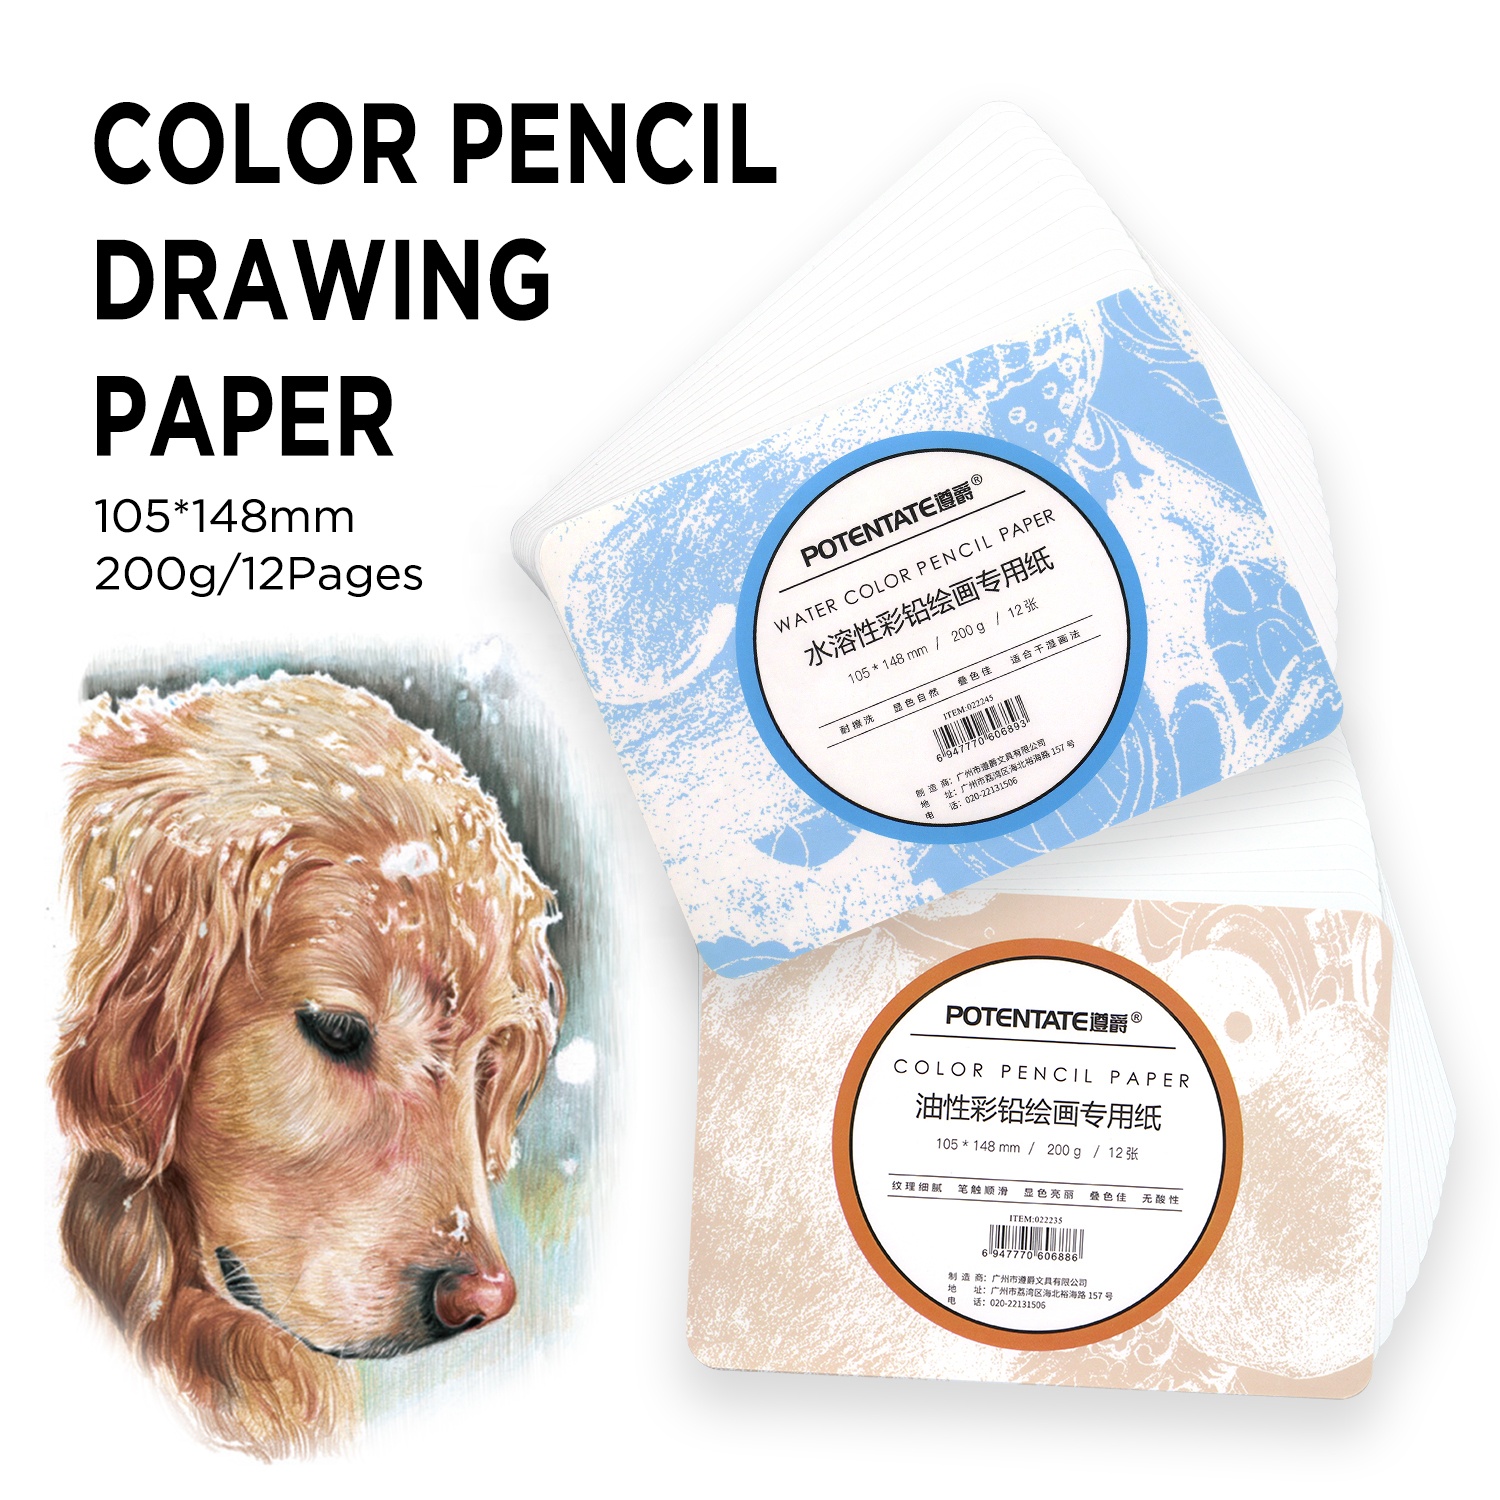 Potentate A6 Premium Sketch Drawing ورقة لقلم رصاص اللون الزيتي والماء Pencil200GSM PADE/12 PAGES1